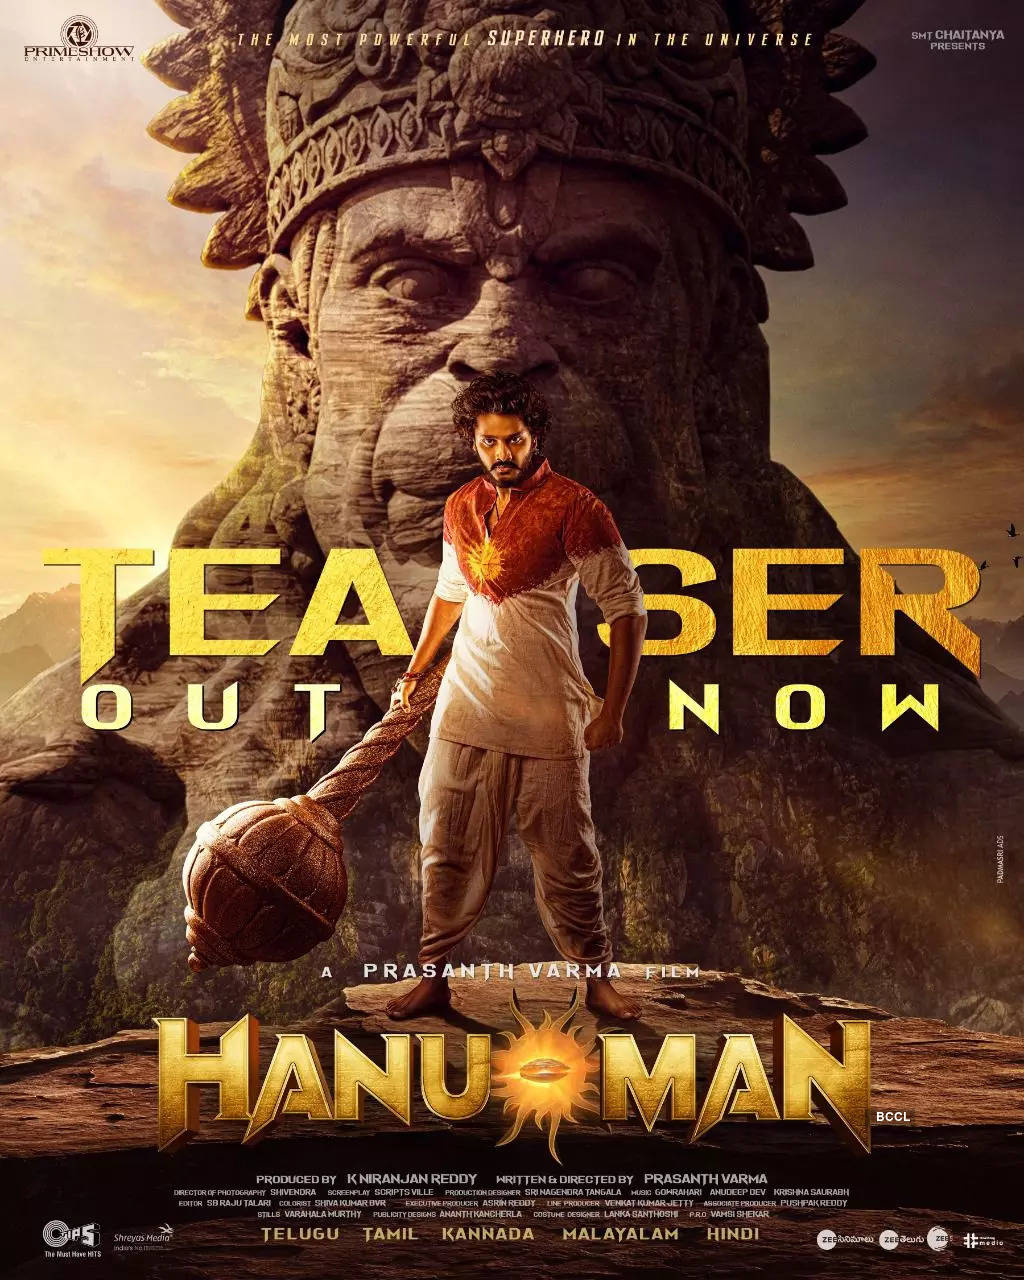 Prasanth Varma's Pan-India movie HANUMAN Teaser has been unveiled ...